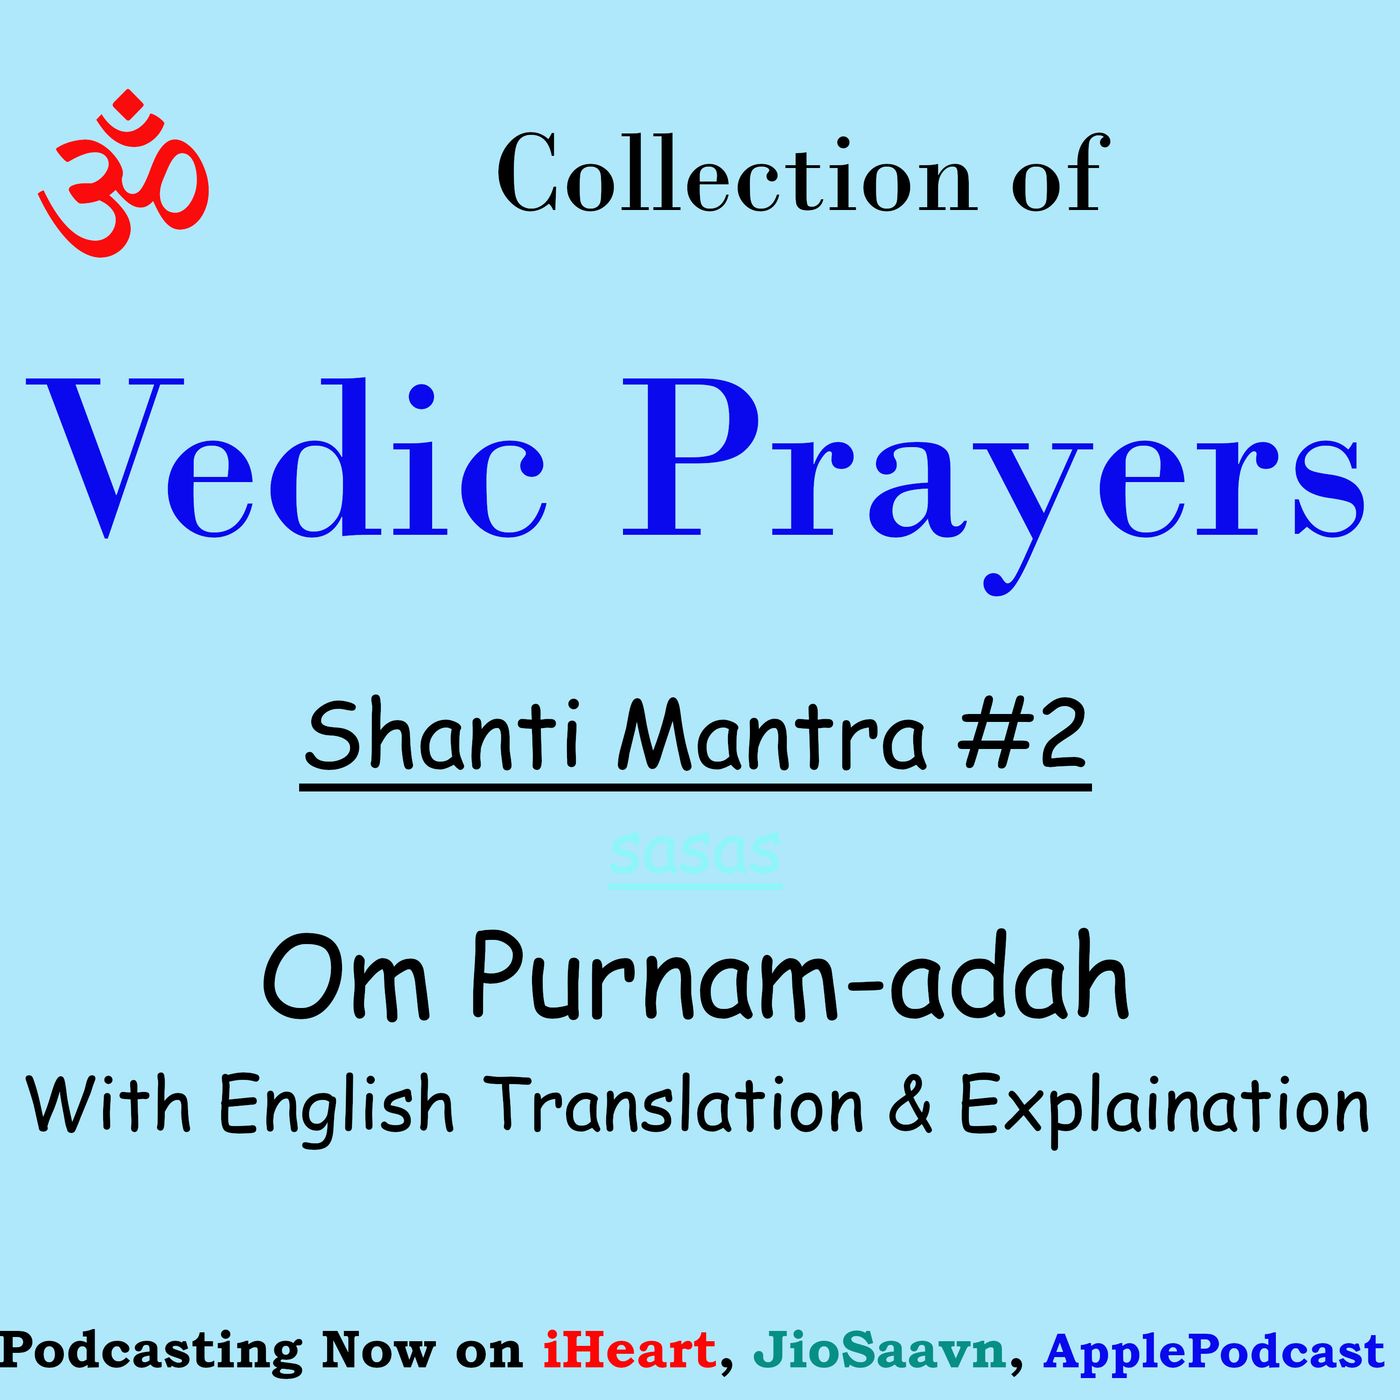 Om PurnamAdah - Shanti Mantra from IsaVasya Upanishad